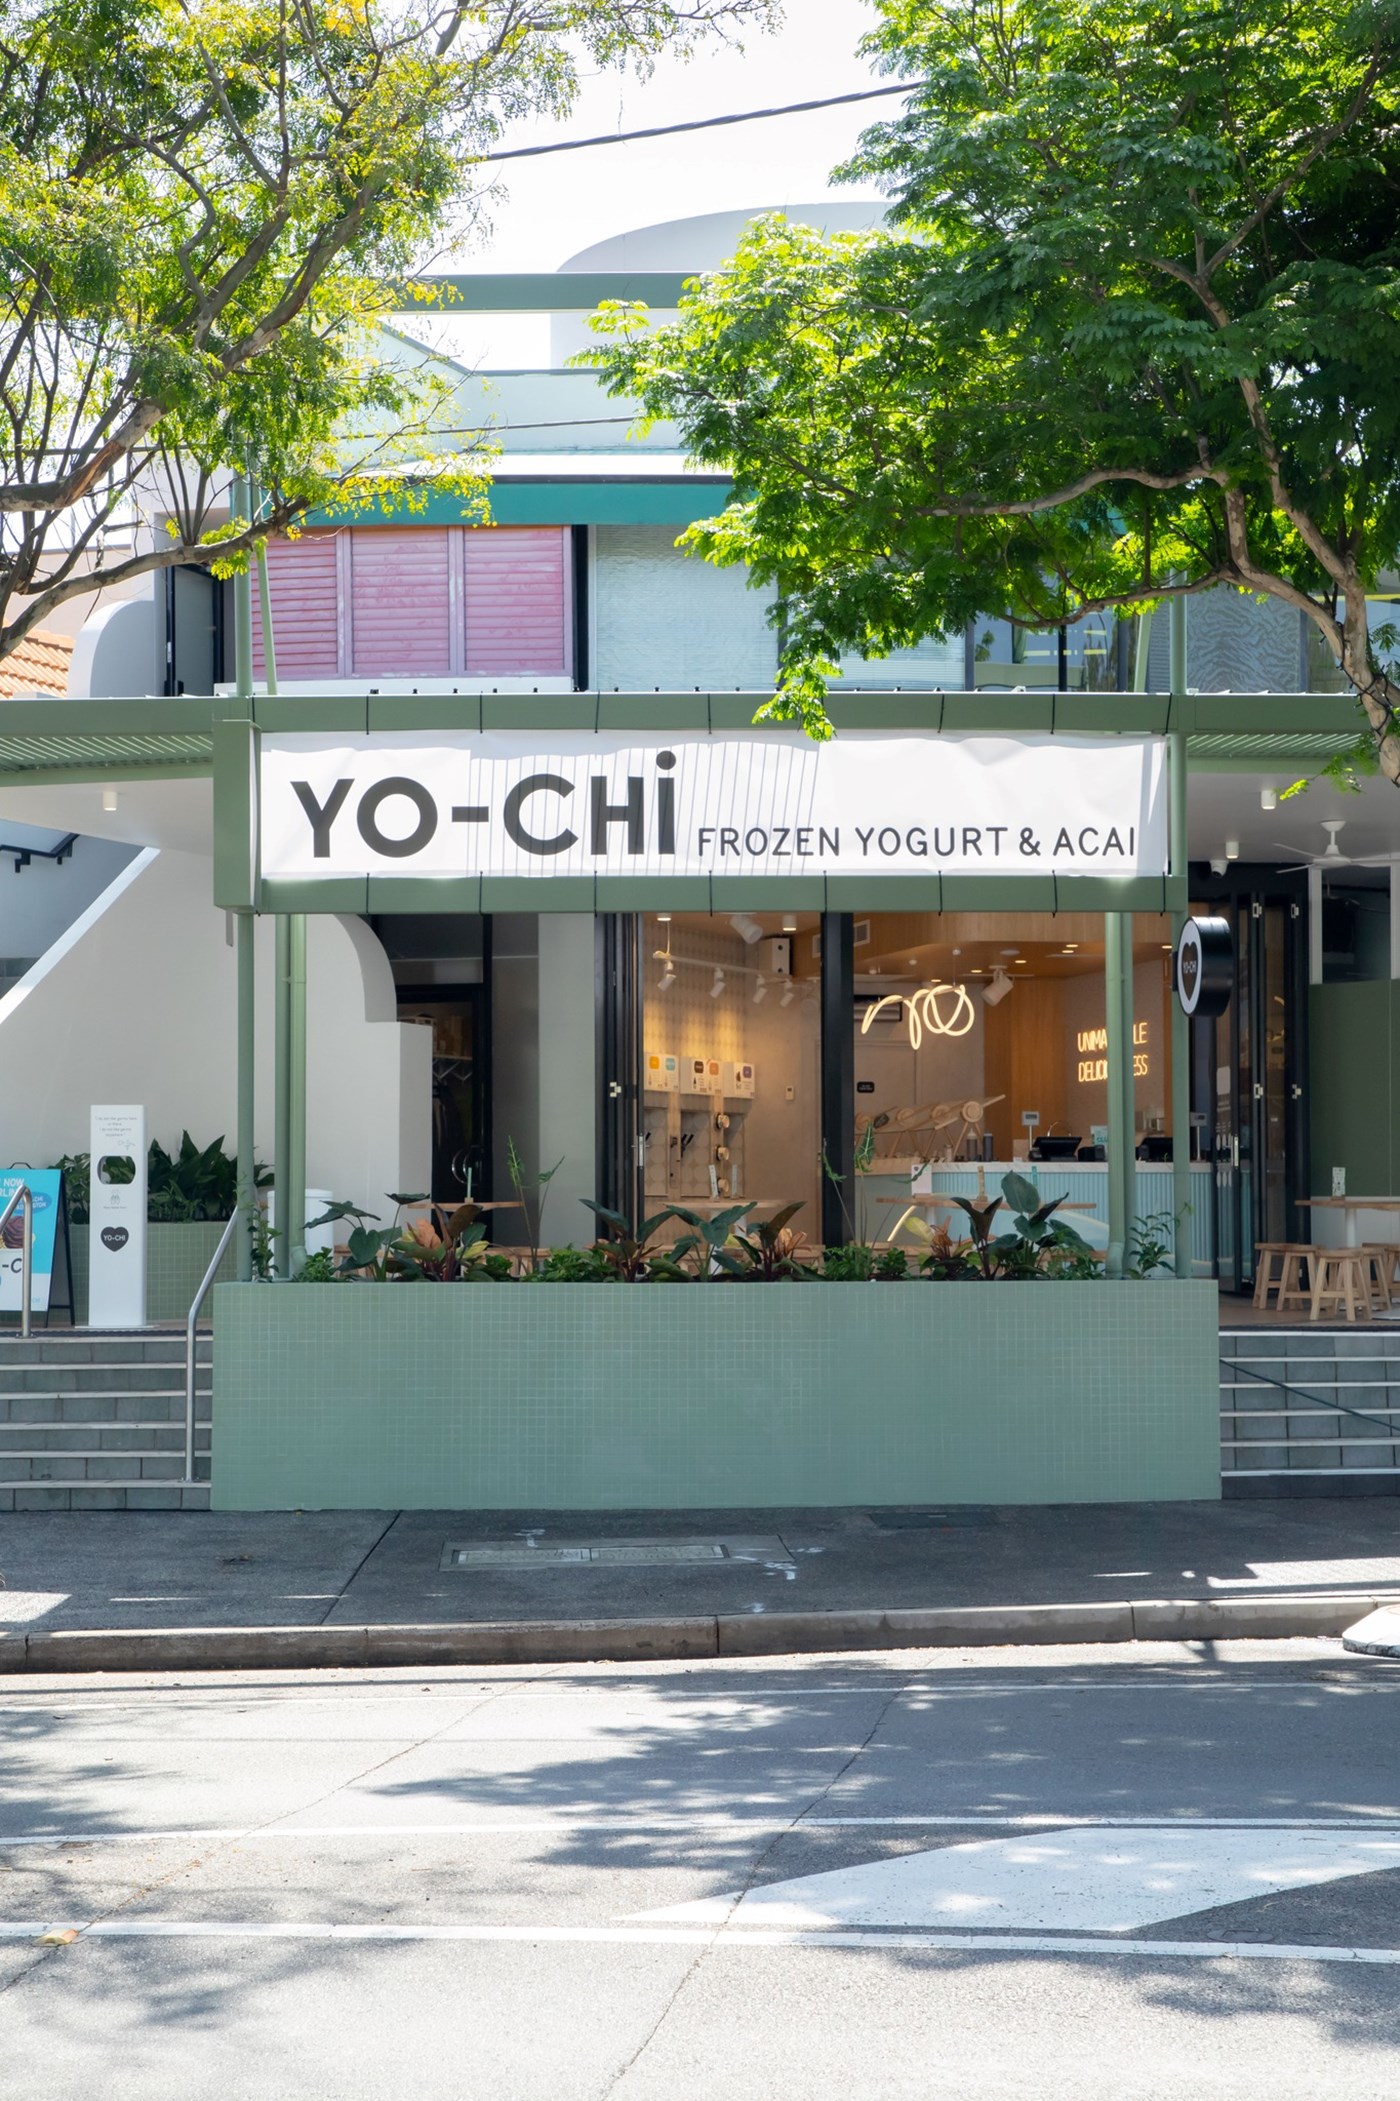 Street view facing into Yo-Chi yoghurt cafe Paddington Brisbane